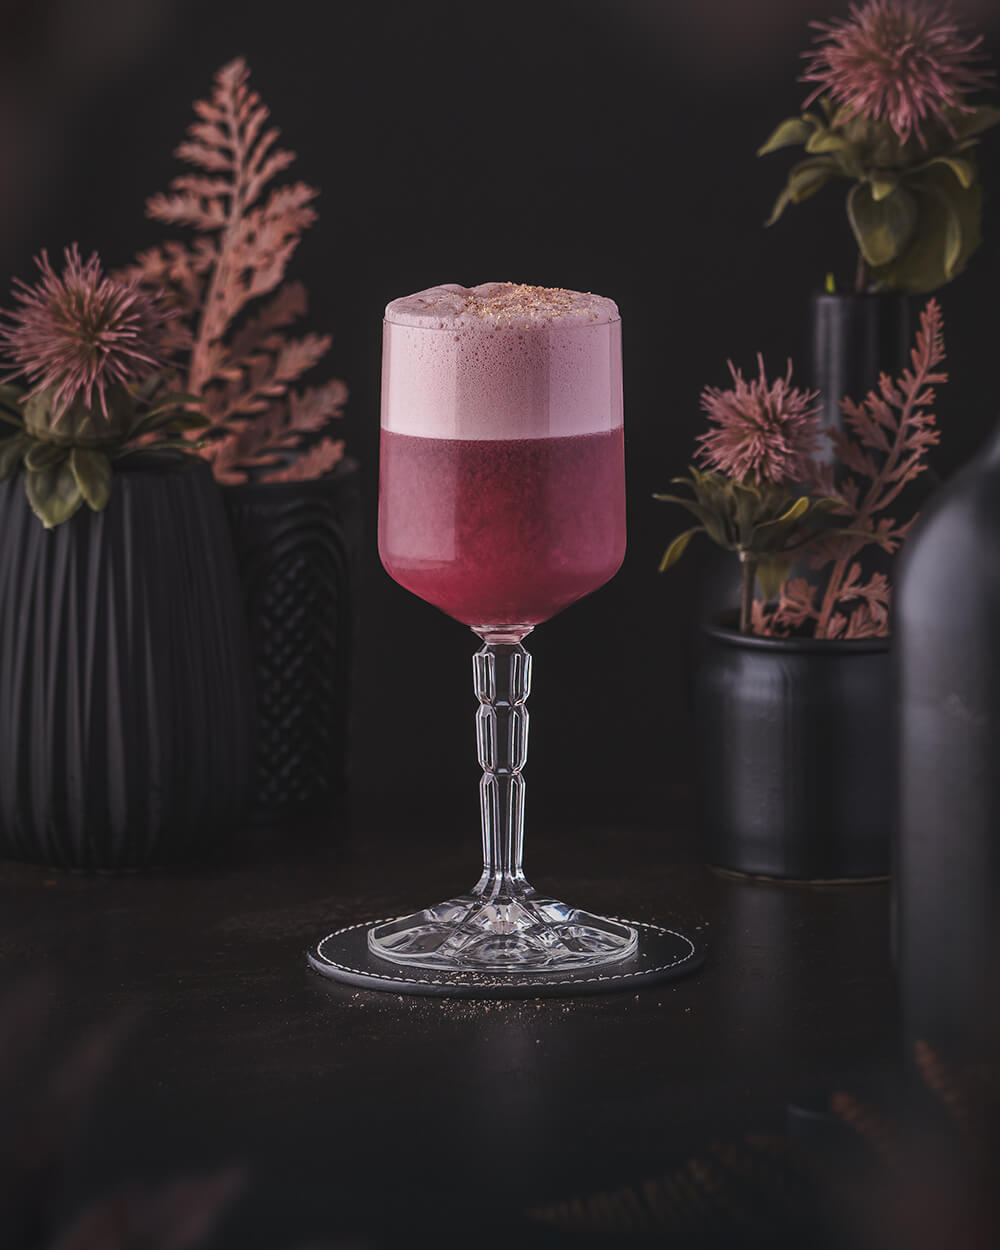 Elk’s Own Cocktail – Rye Whiskey meets Port Wine